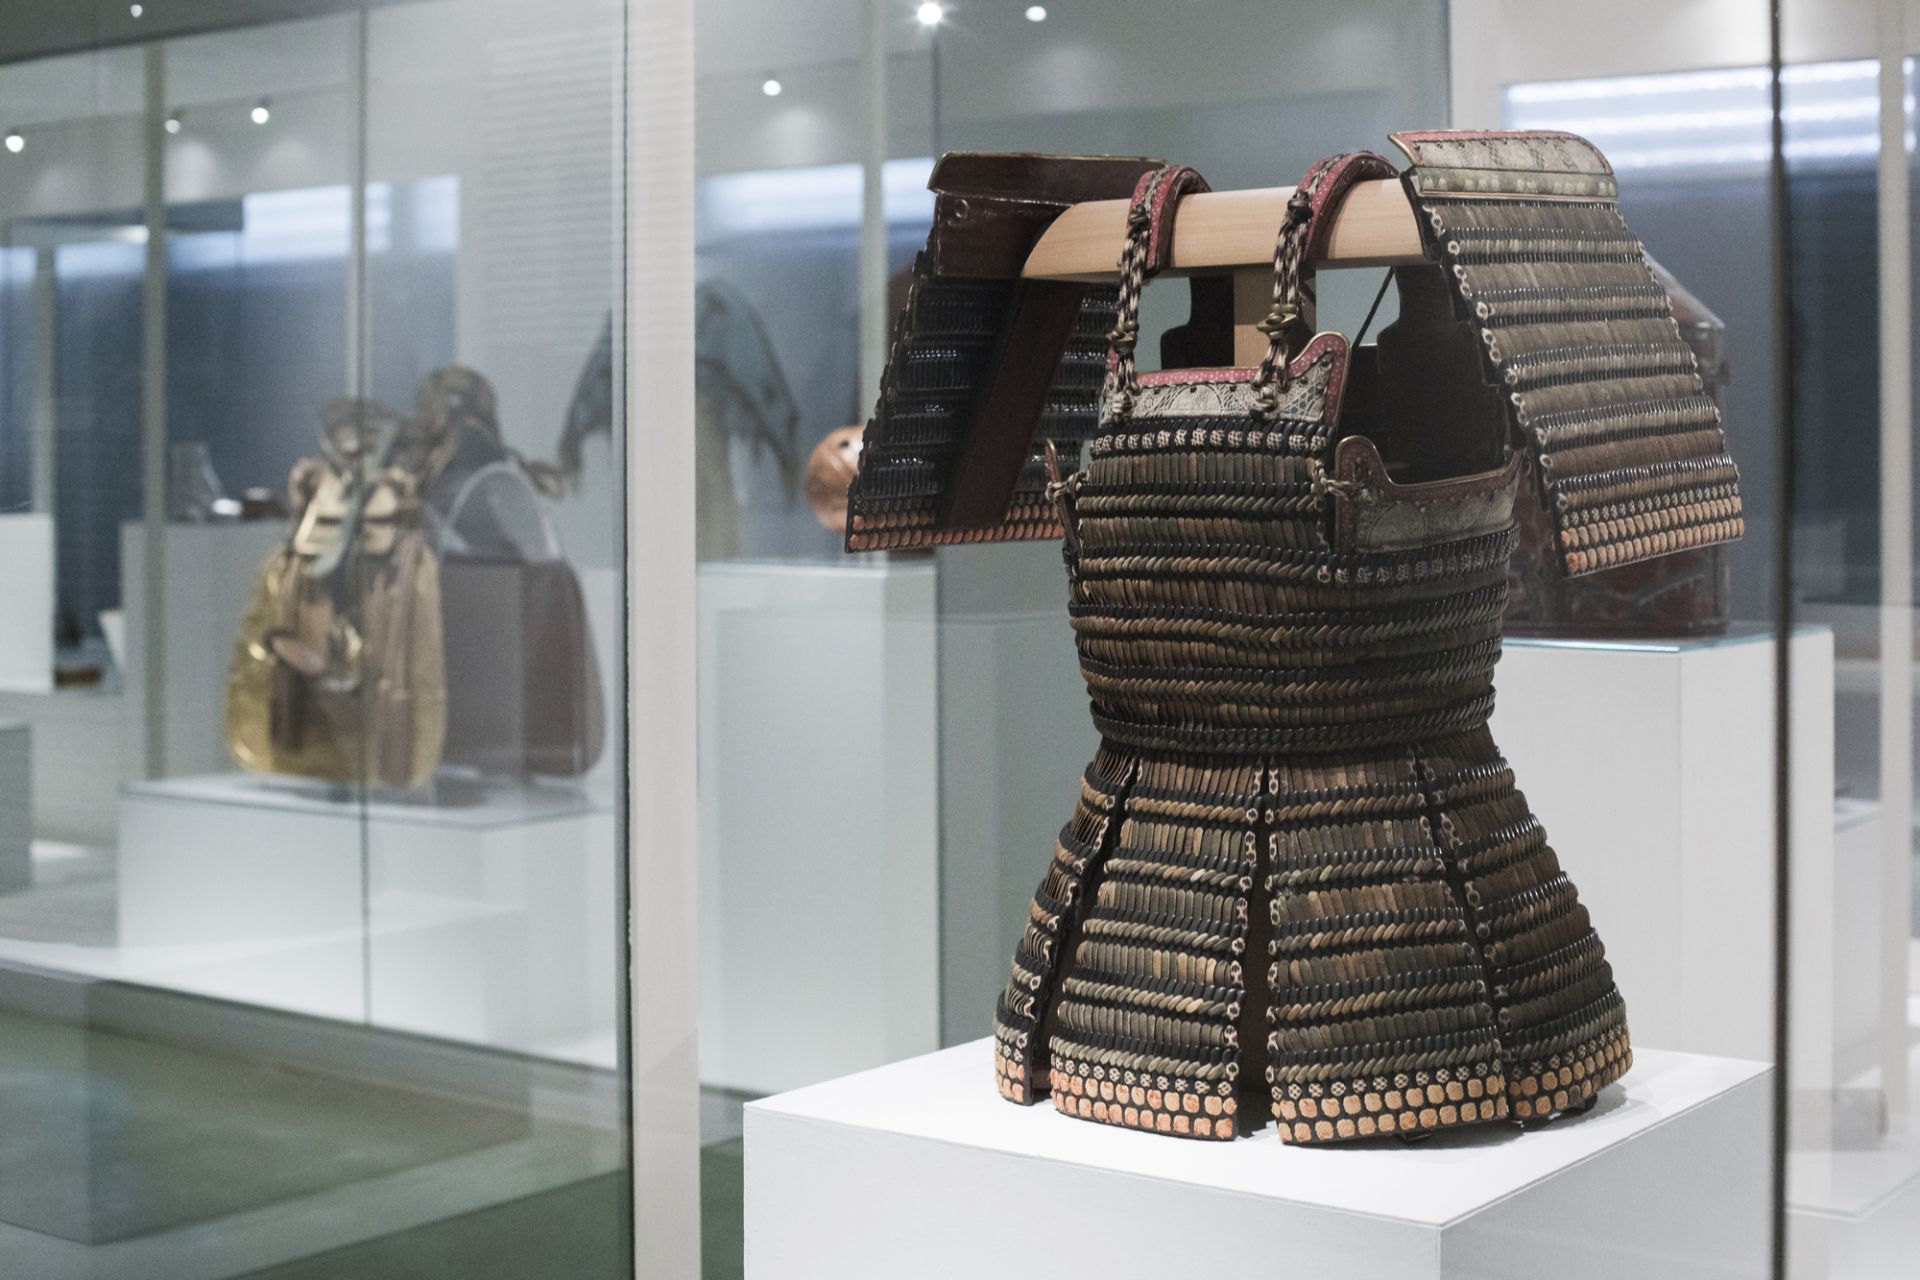 Samurai armor, Japan, undated